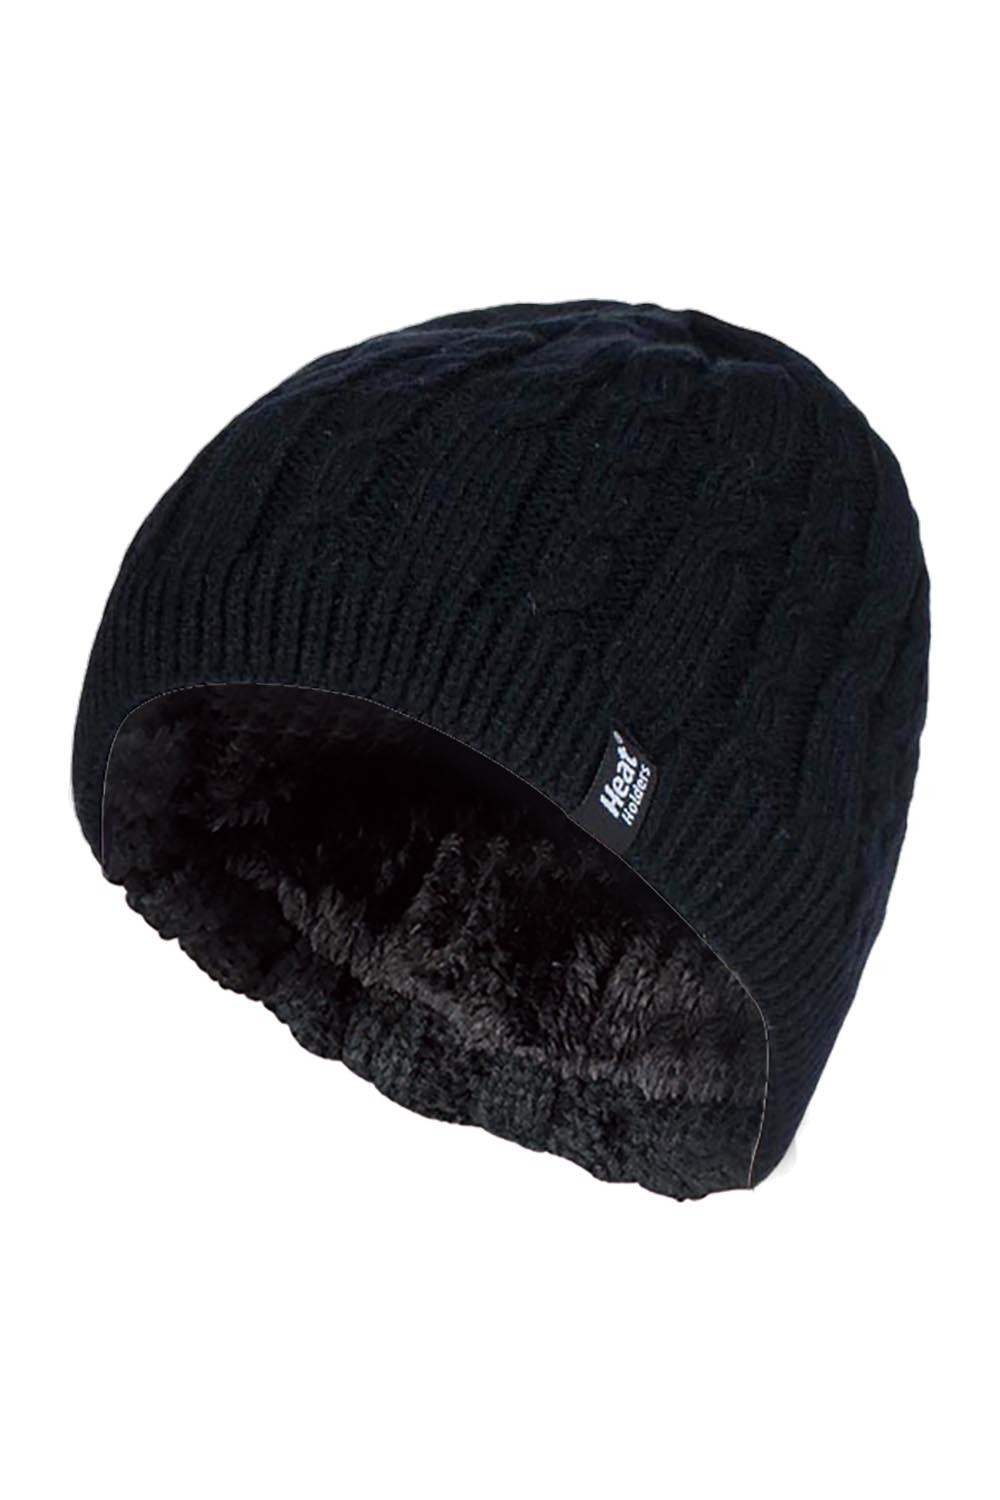 Womens Thermal Fleece Lined Winter Hat -